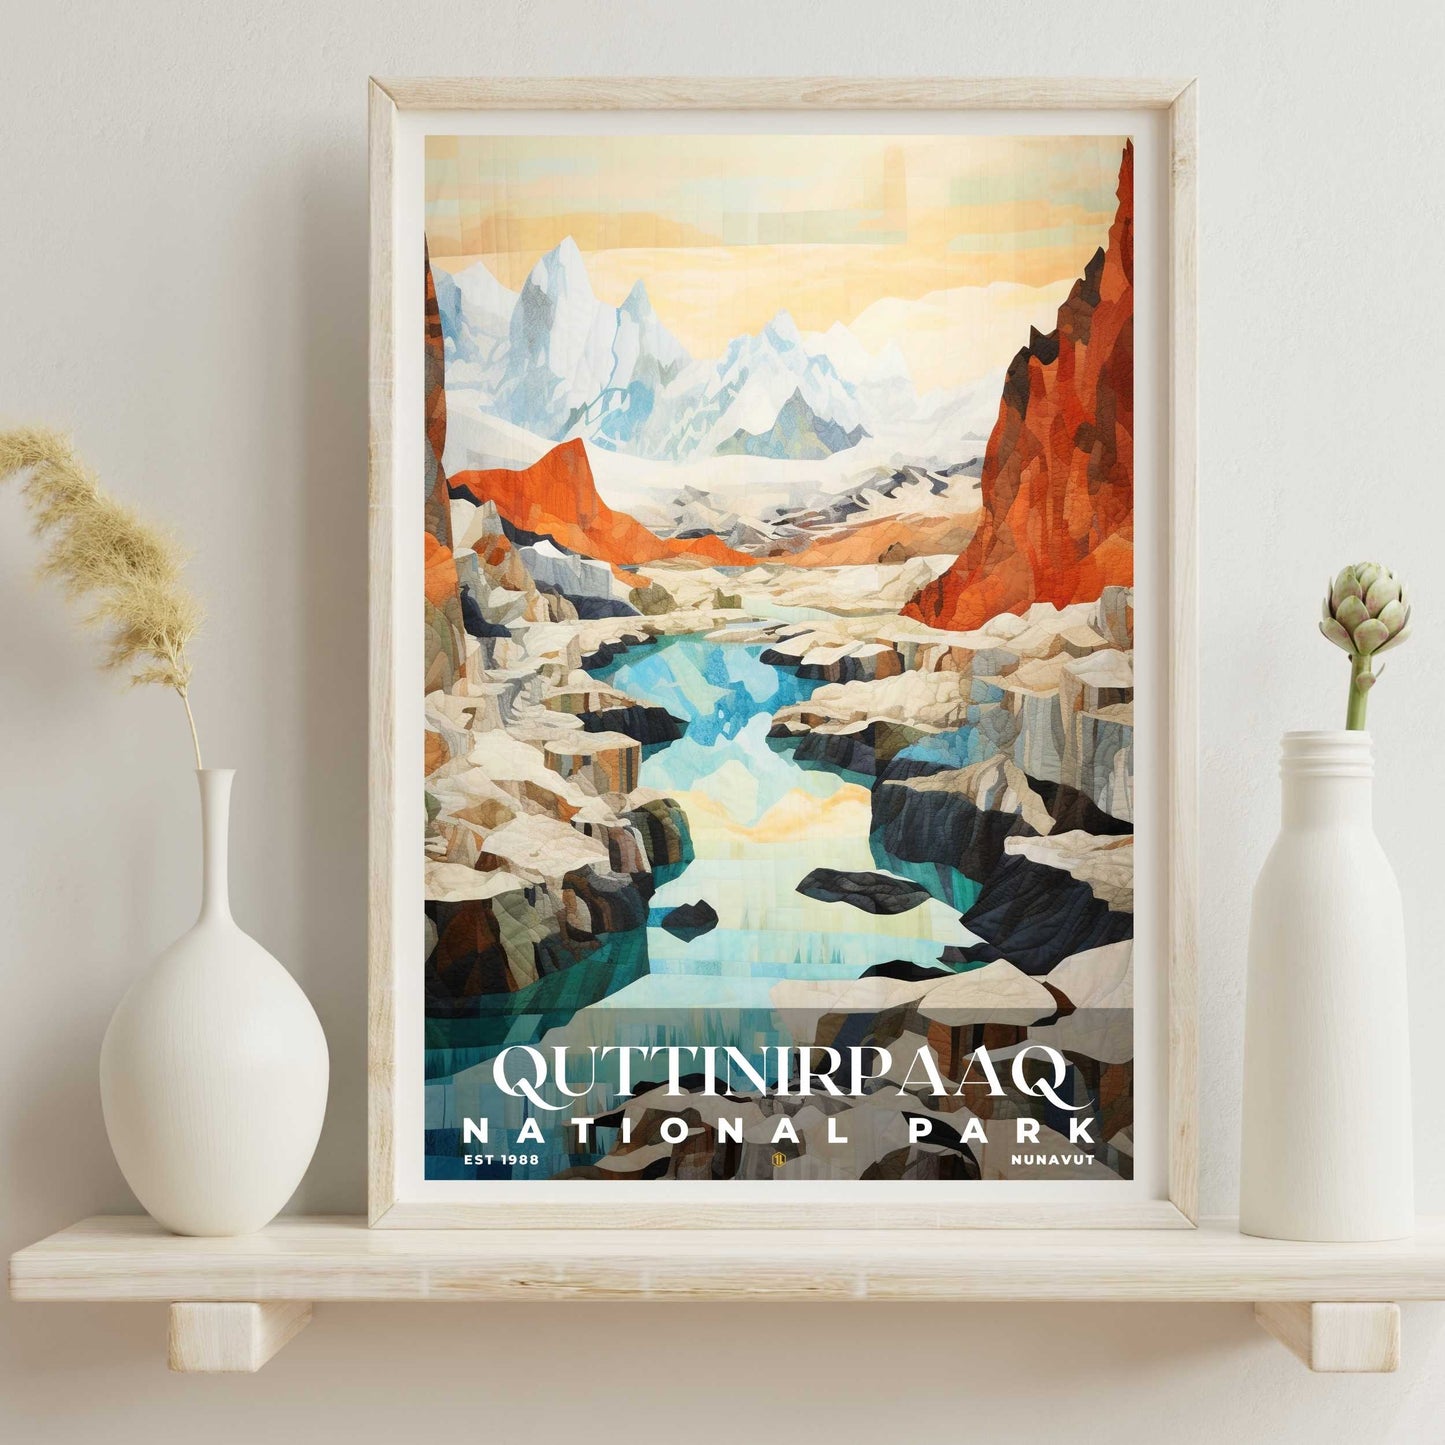 Quttinirpaaq National Park Poster | S09